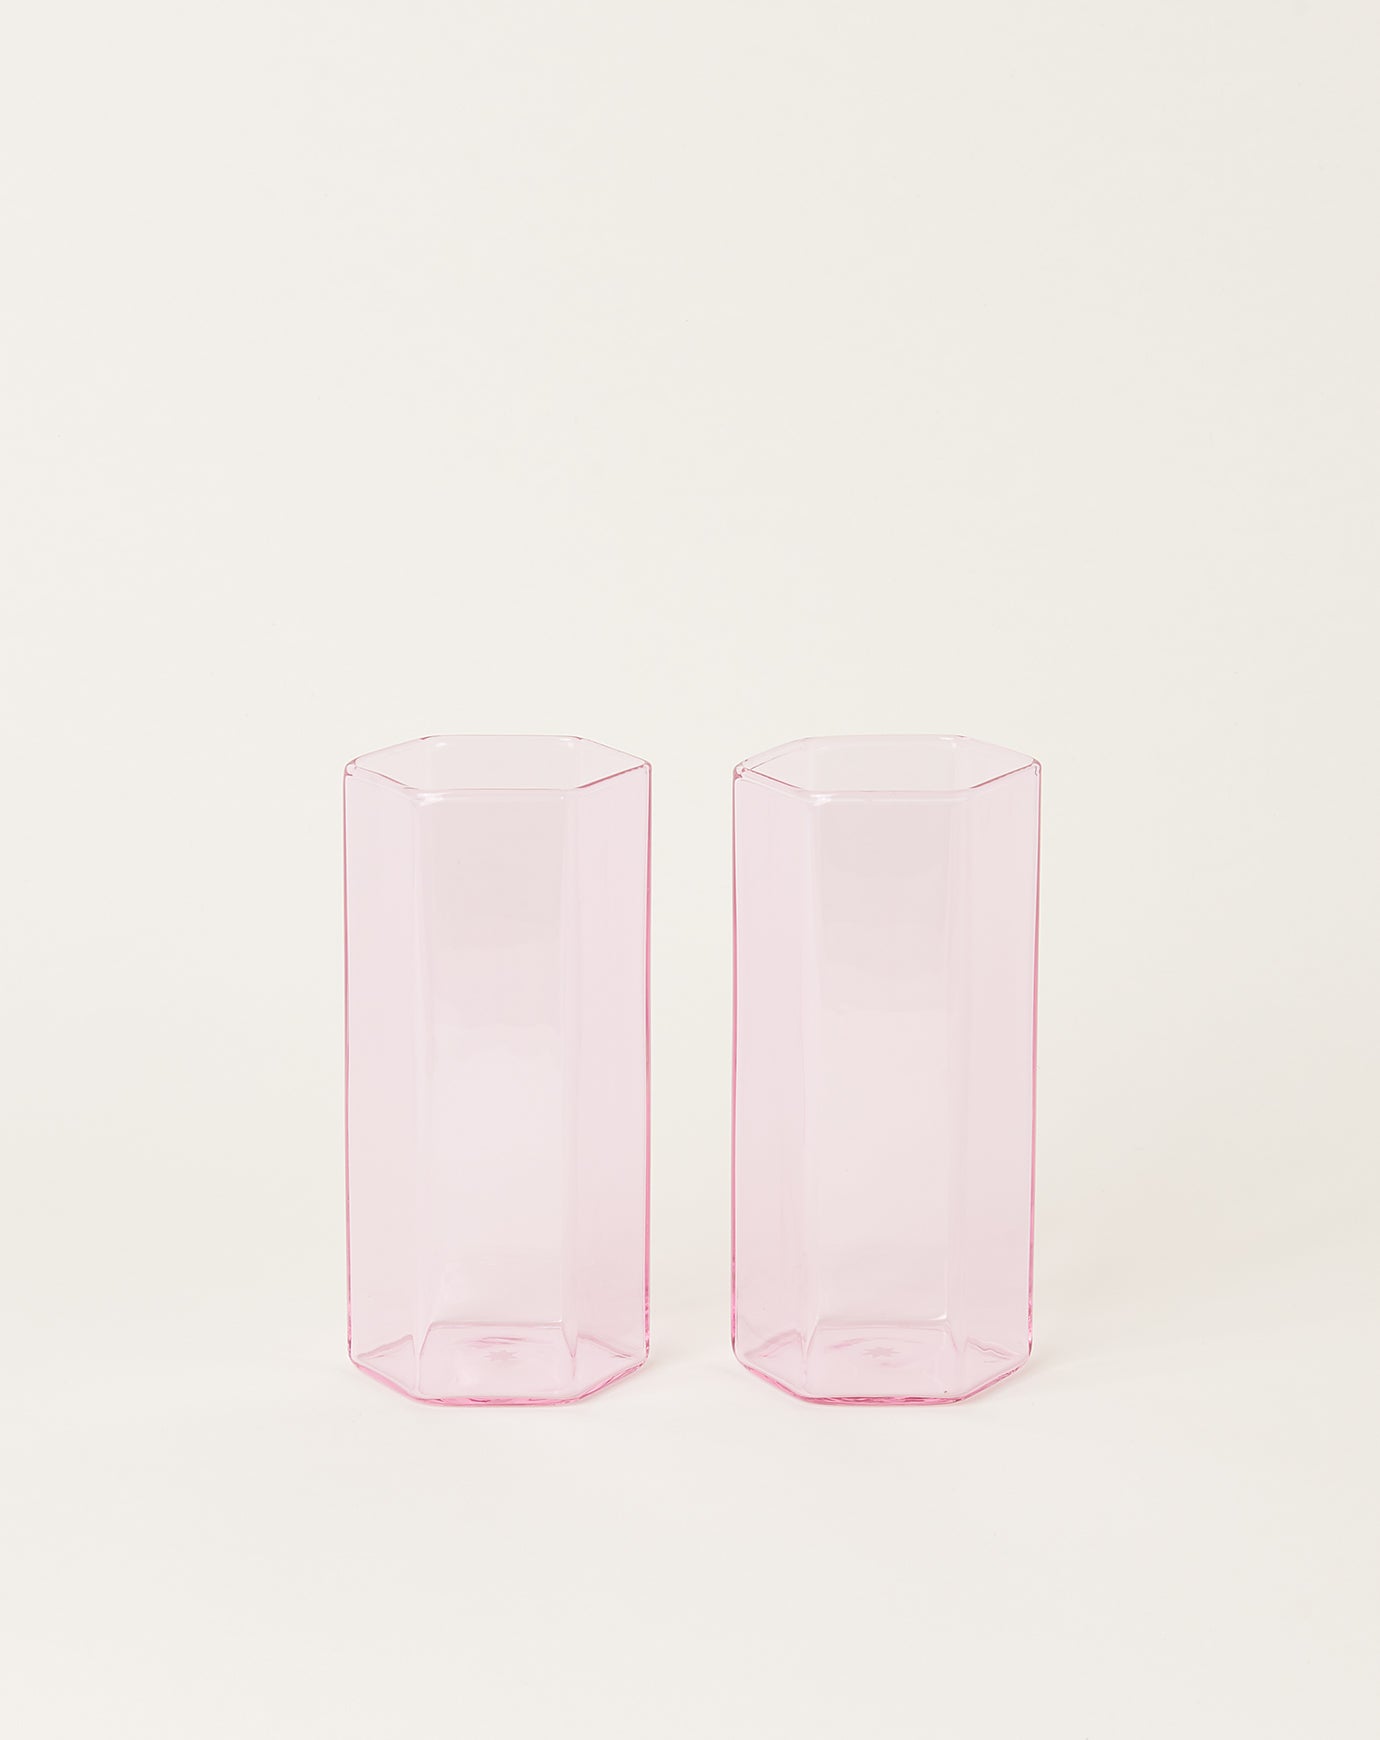 Maison Balzac Coucou Tall Glass Set in Pink